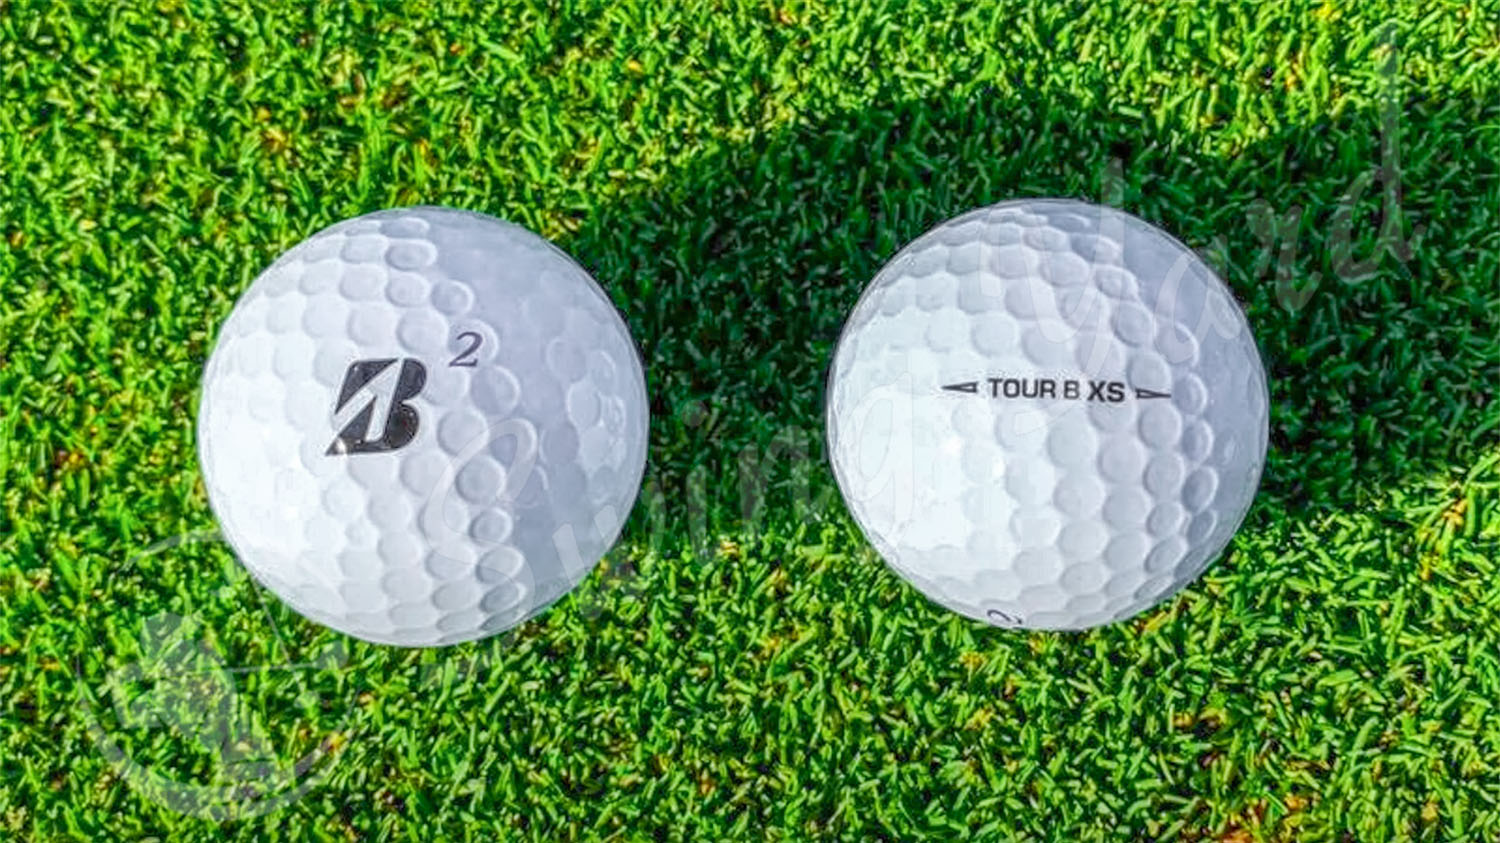 The Bridgestone Tour B XS golf balls in the grass for testing